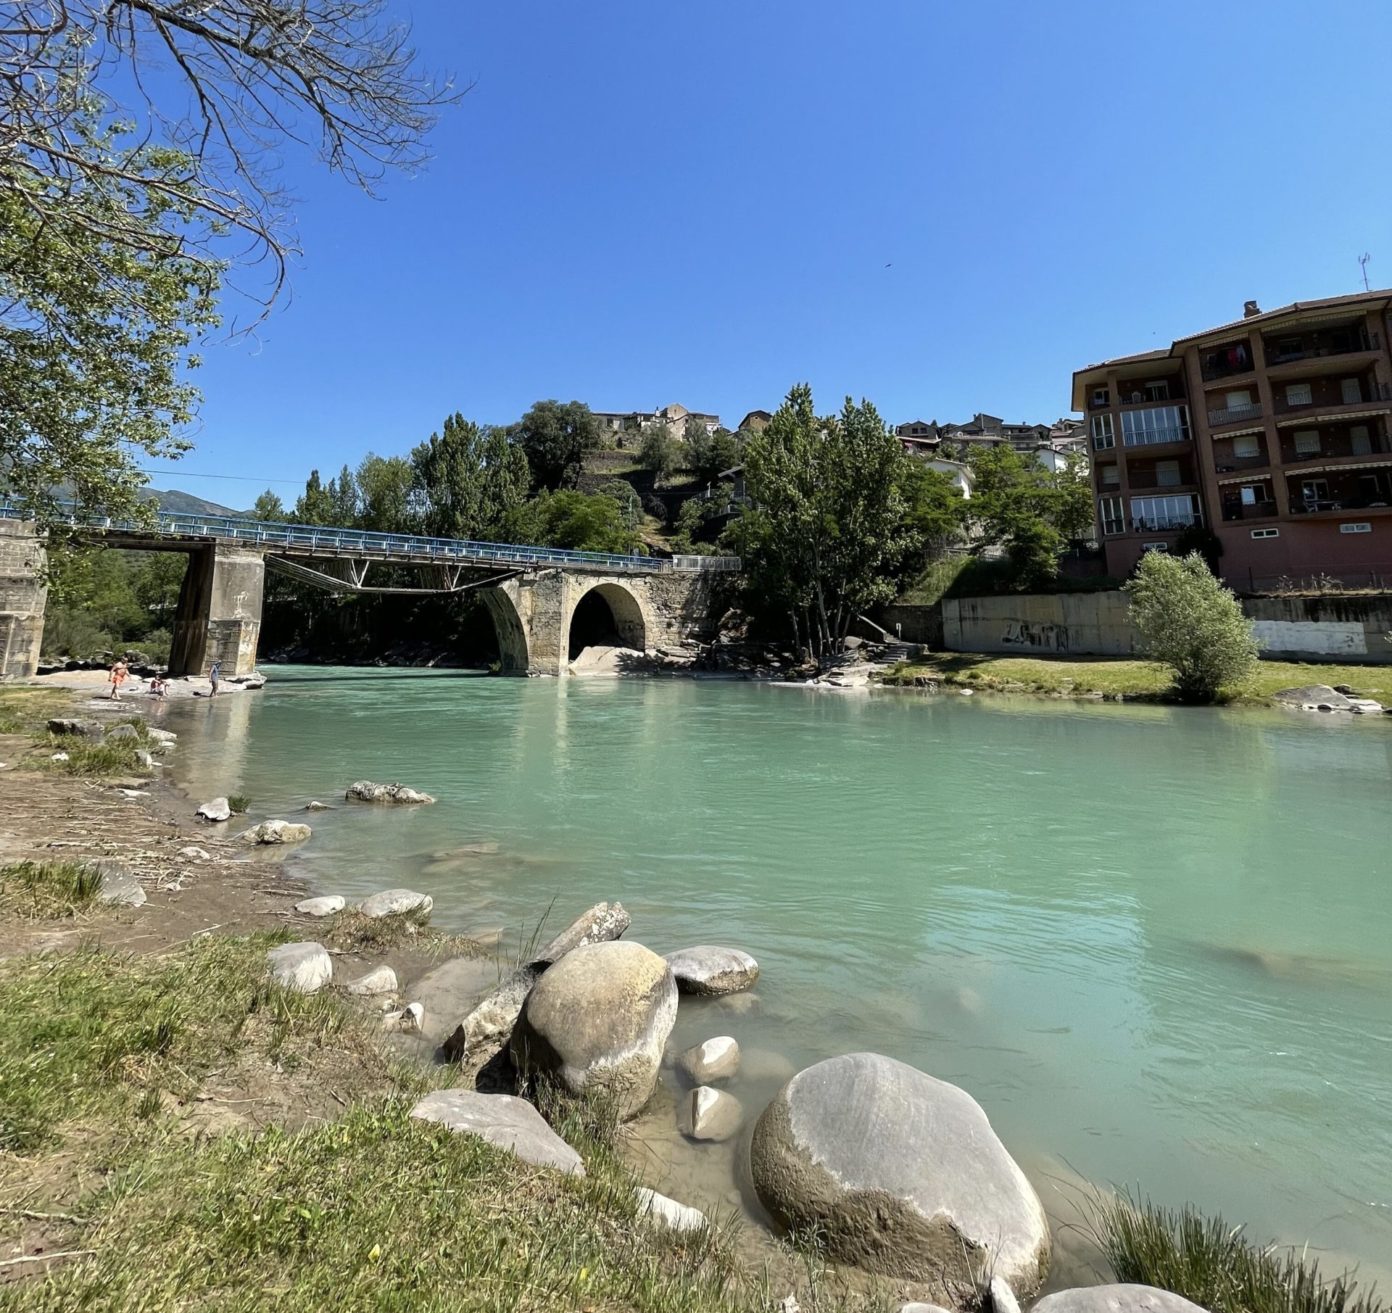 La Gorga de Boltaña is a bathing area located under the bridge of the town.